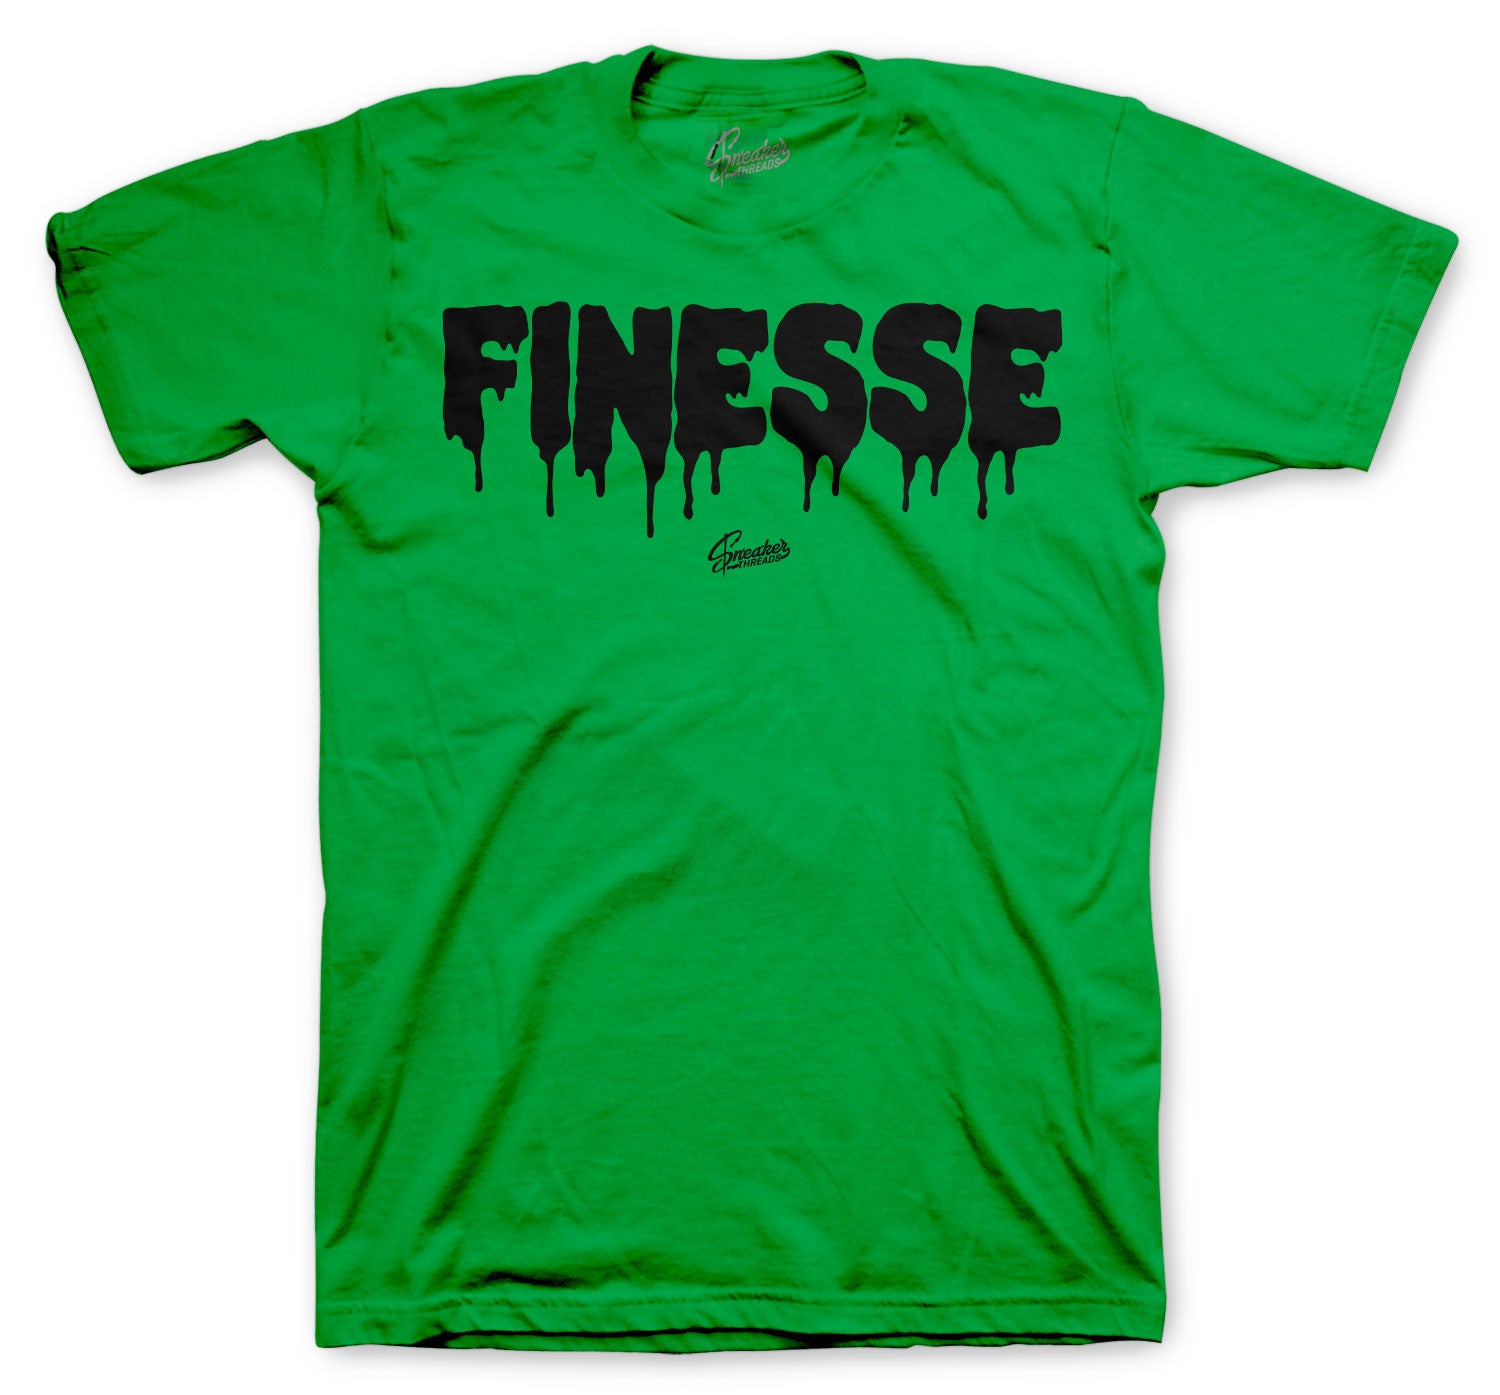 Retro 3 Pine Green Shirt - Finesse - Green